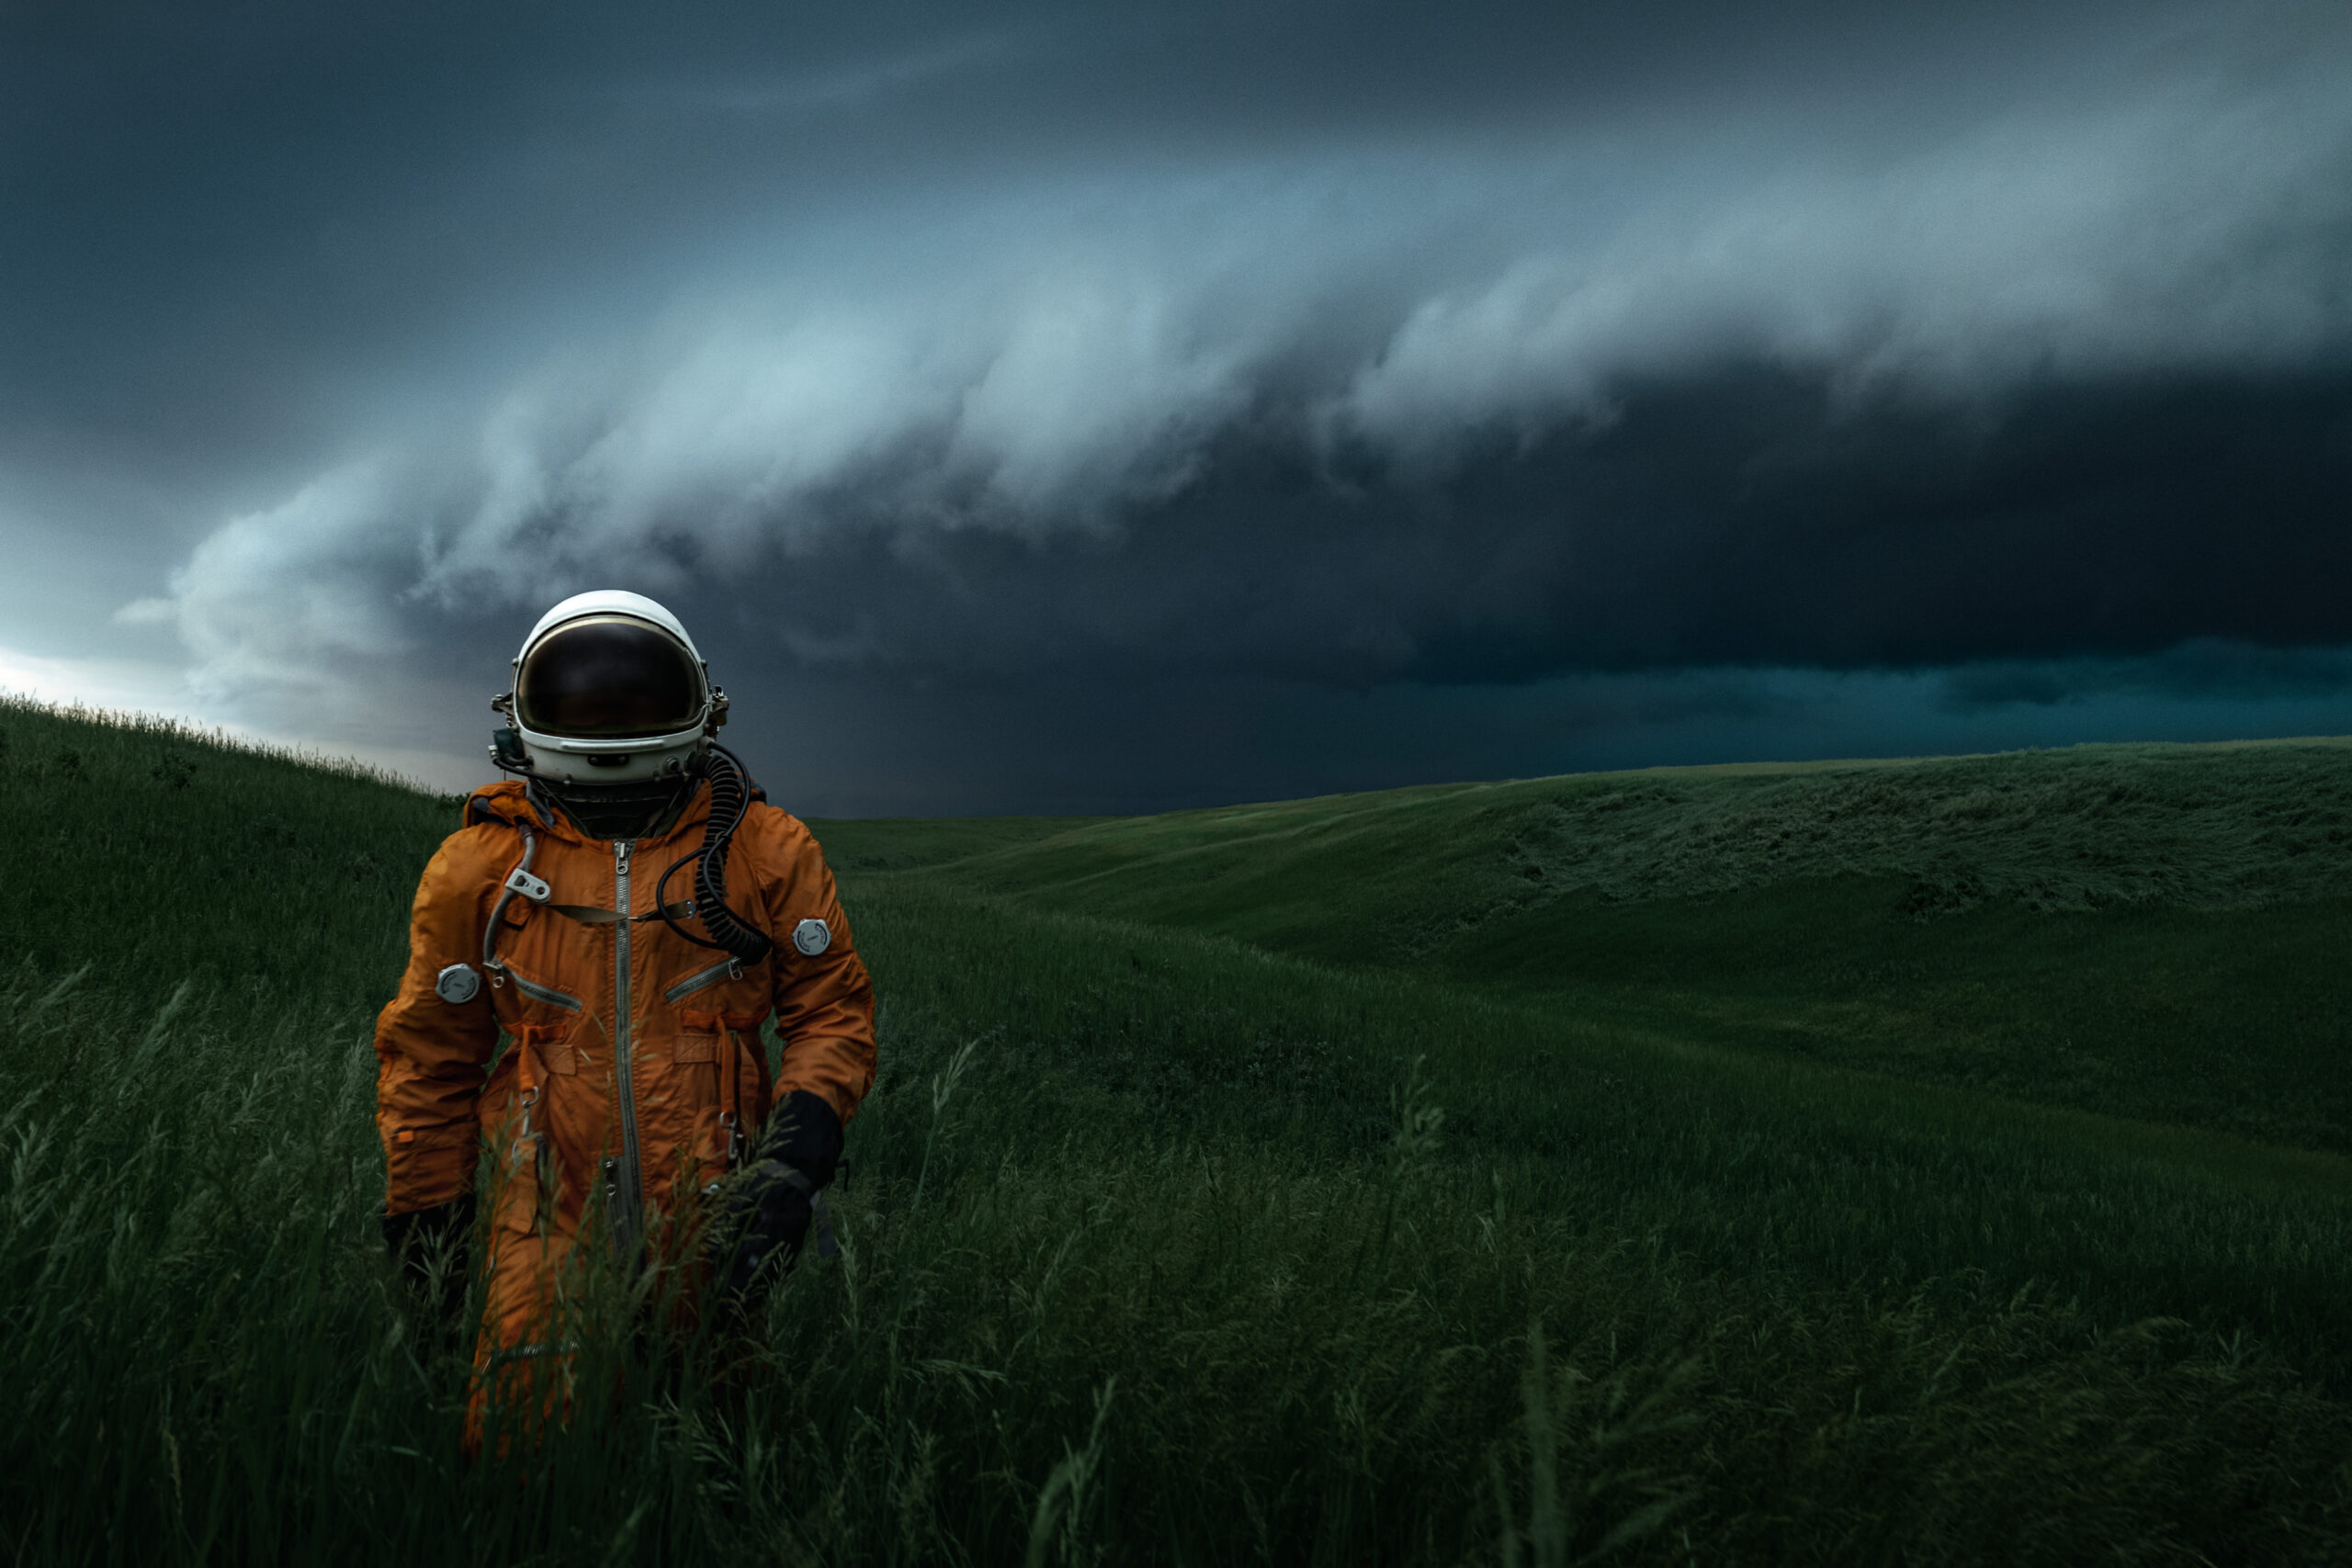 an astronaut wearing an orange space suit walks below a large storm shelf cloud